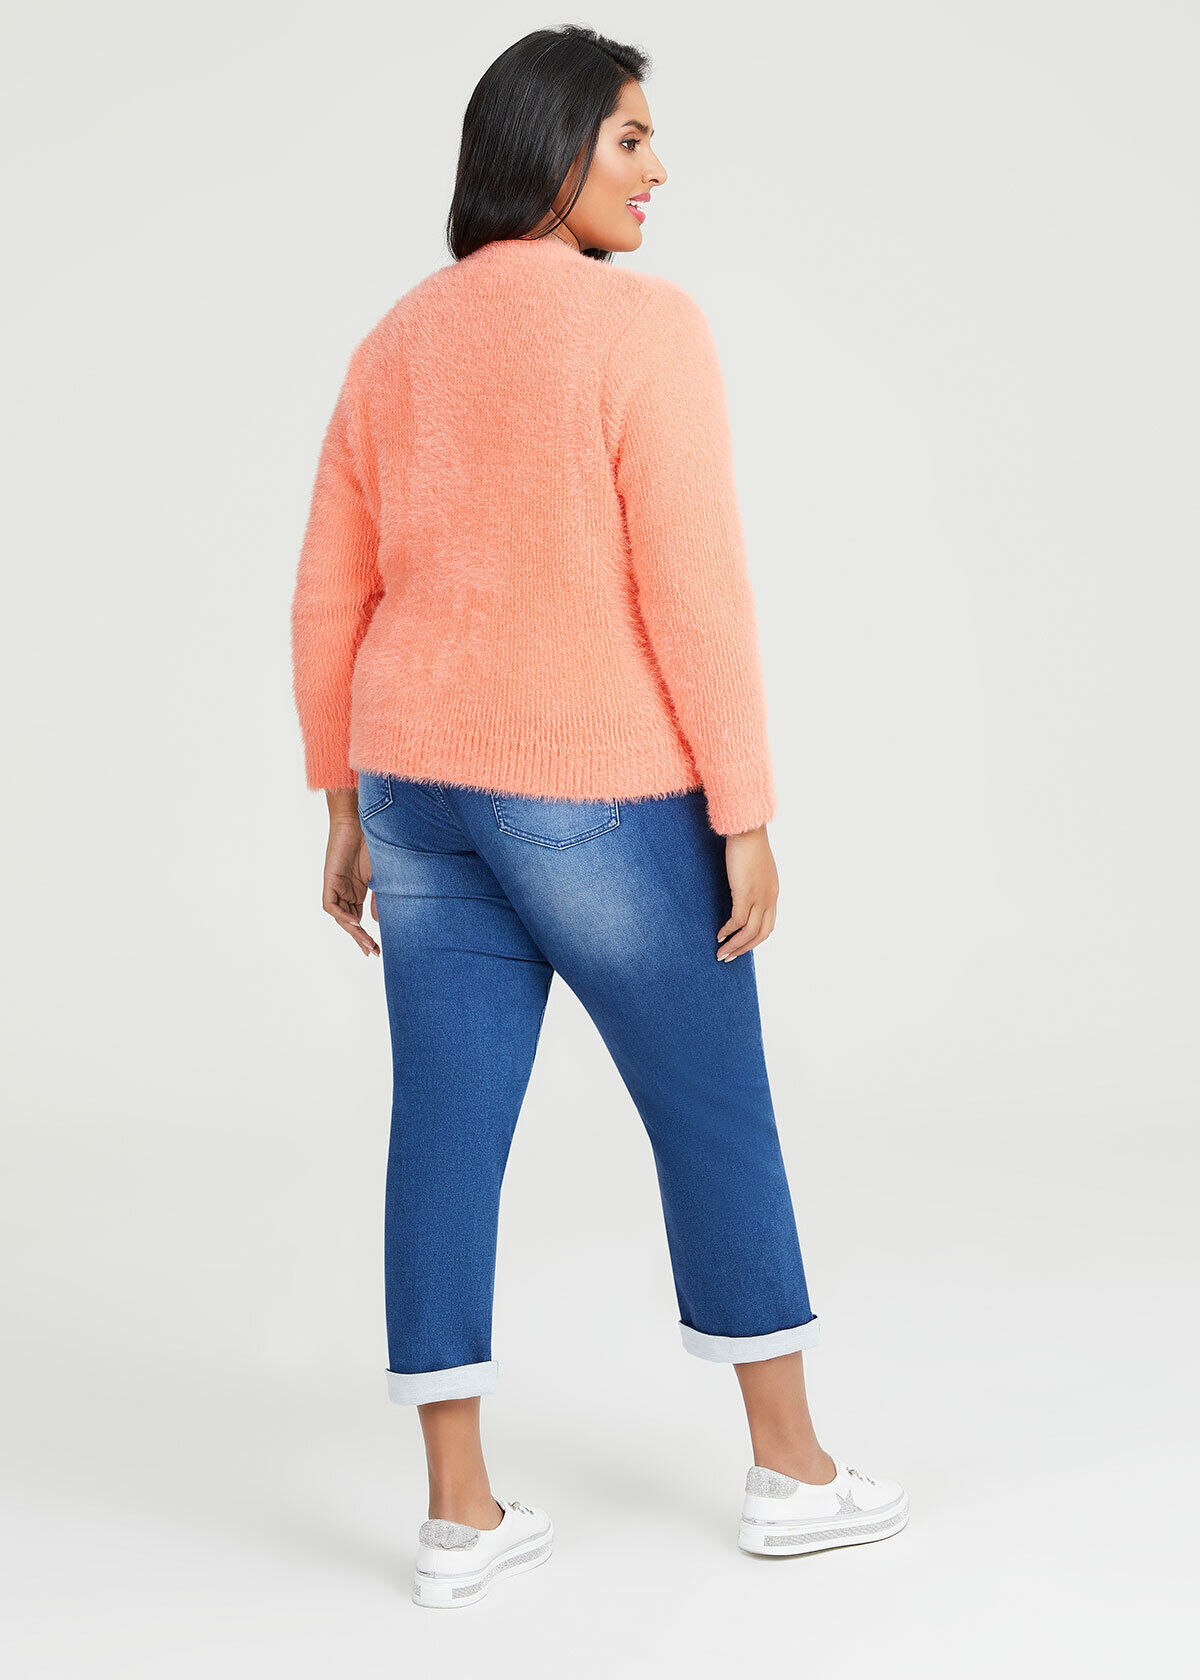 Shop Plus Size Fluffy Knit Short Cardigan in Orange | Sizes 12-30